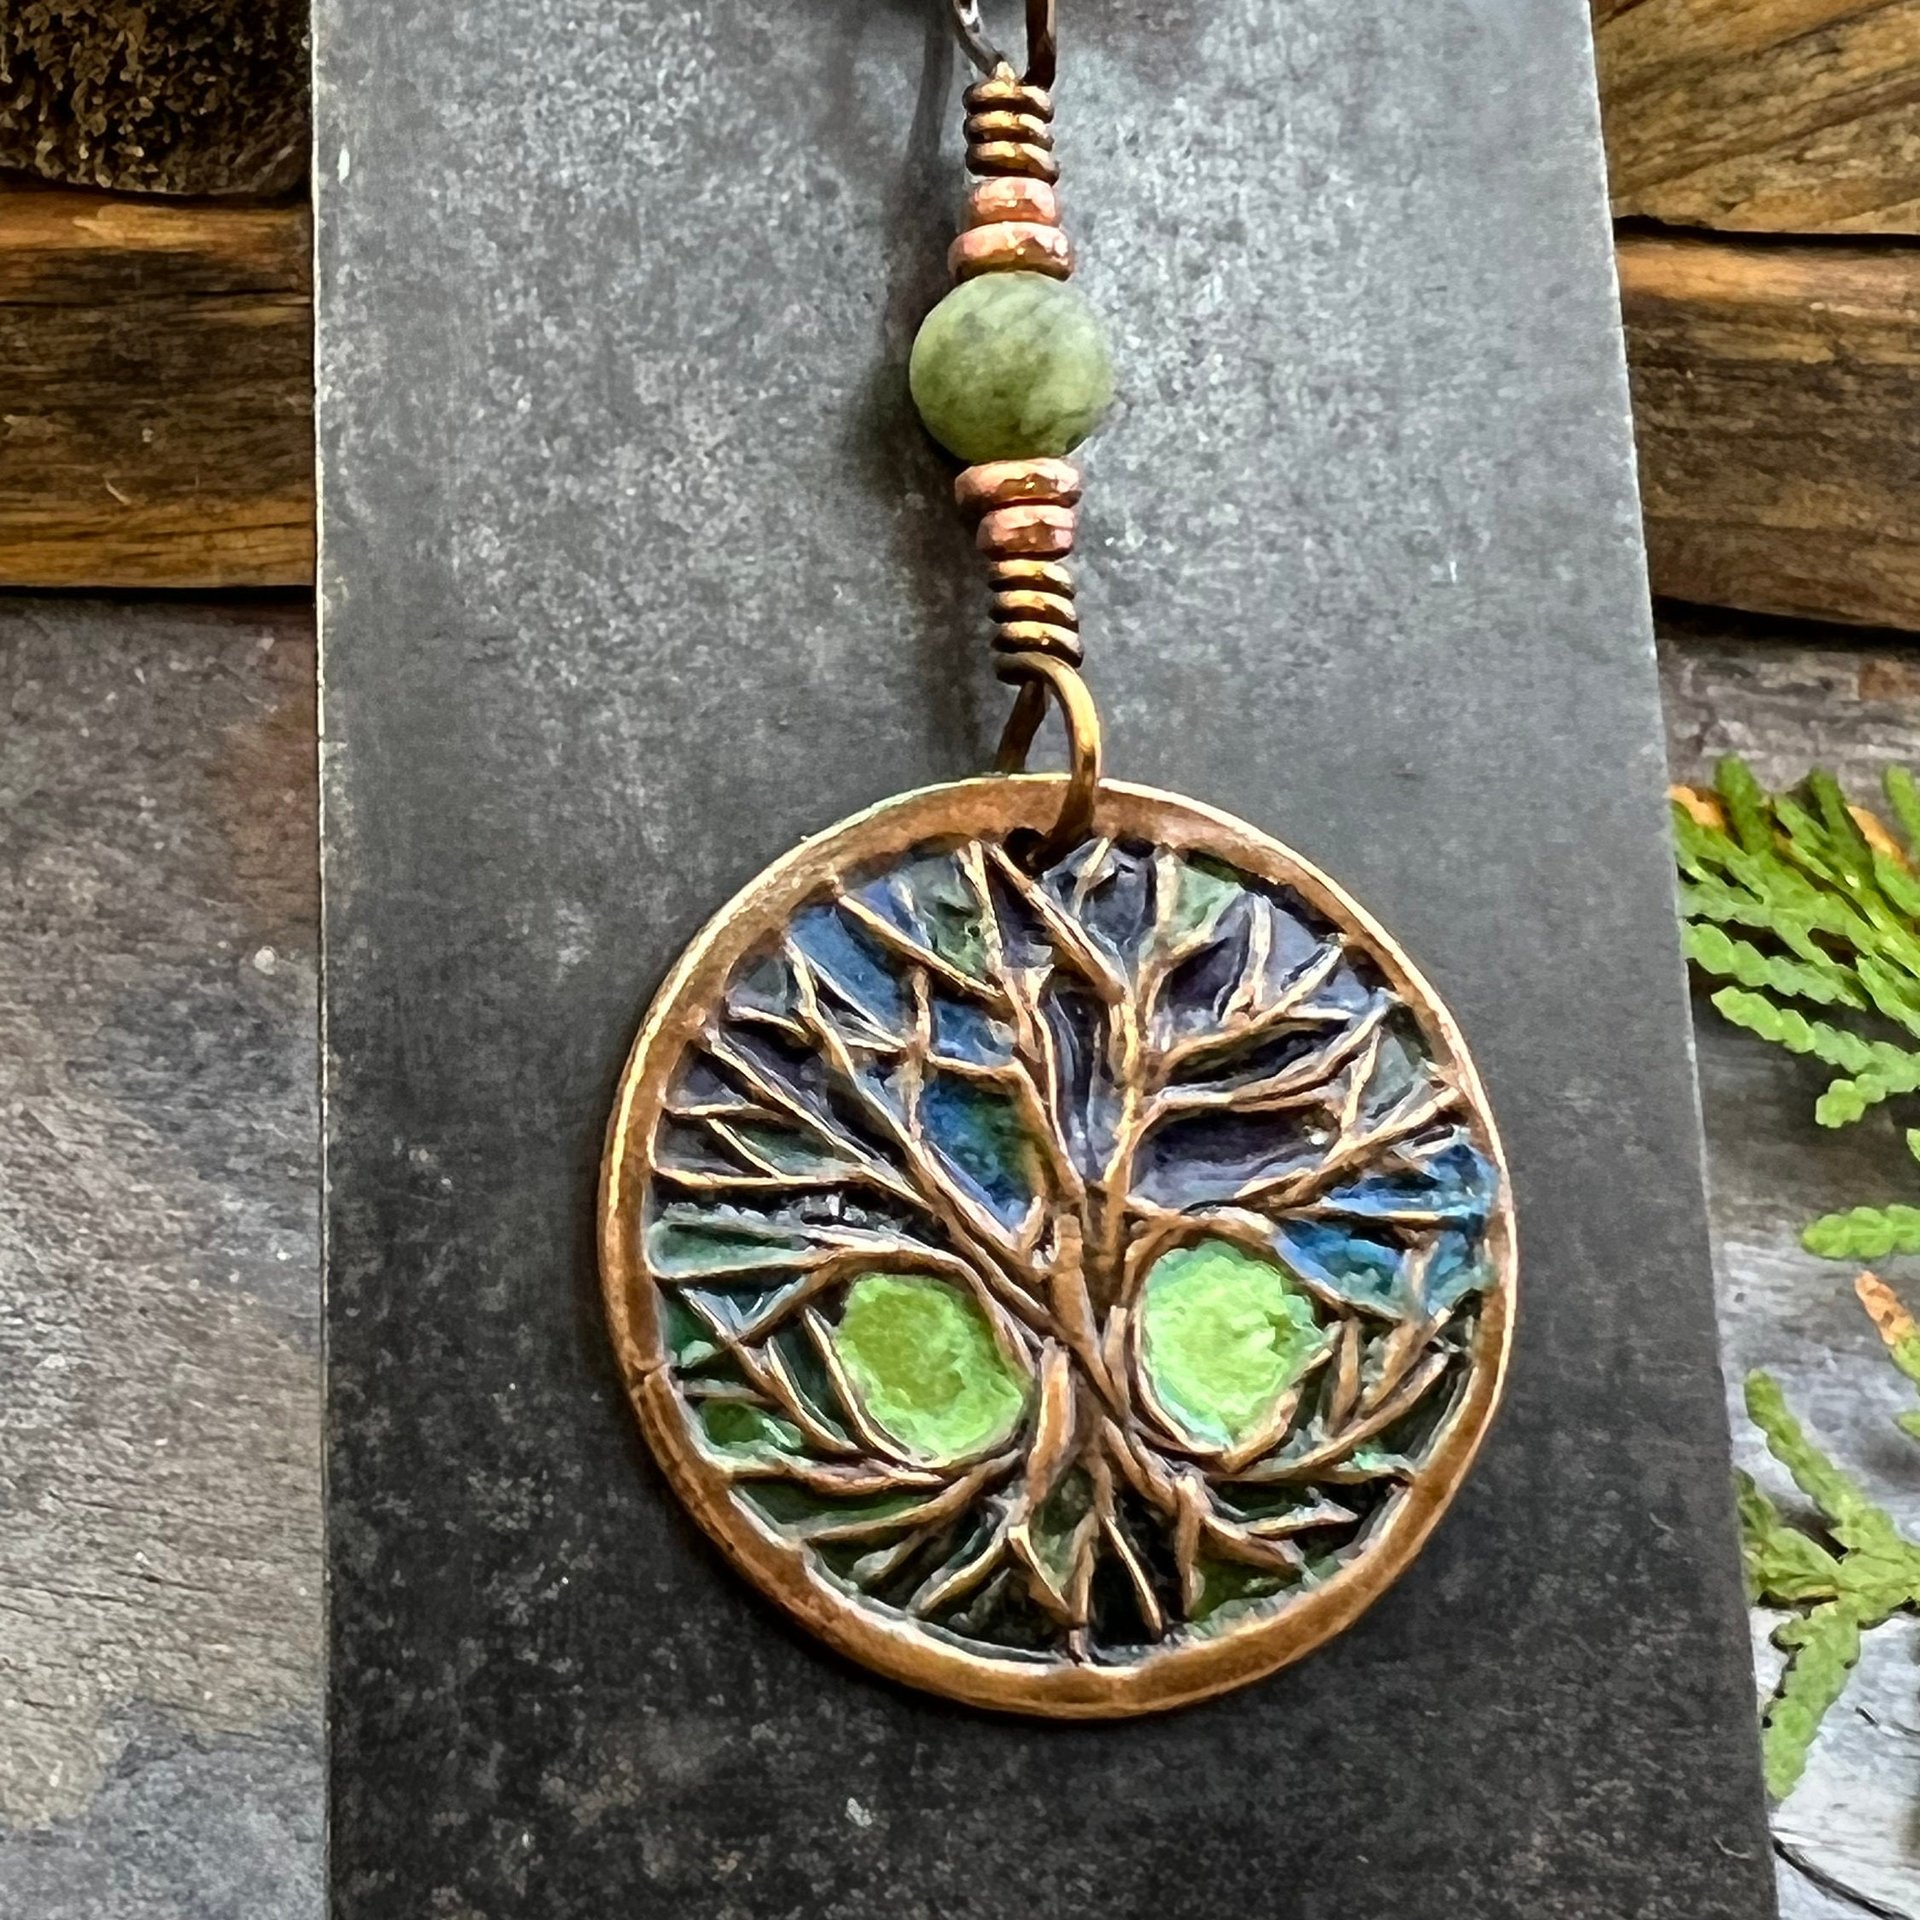 Celtic Tree of Life, Copper Pendant, Colorful Patina, Connemara Marble, Irish Celtic Spirals, Celtic Witch Goddess, Boho, Earthy Art Jewelry